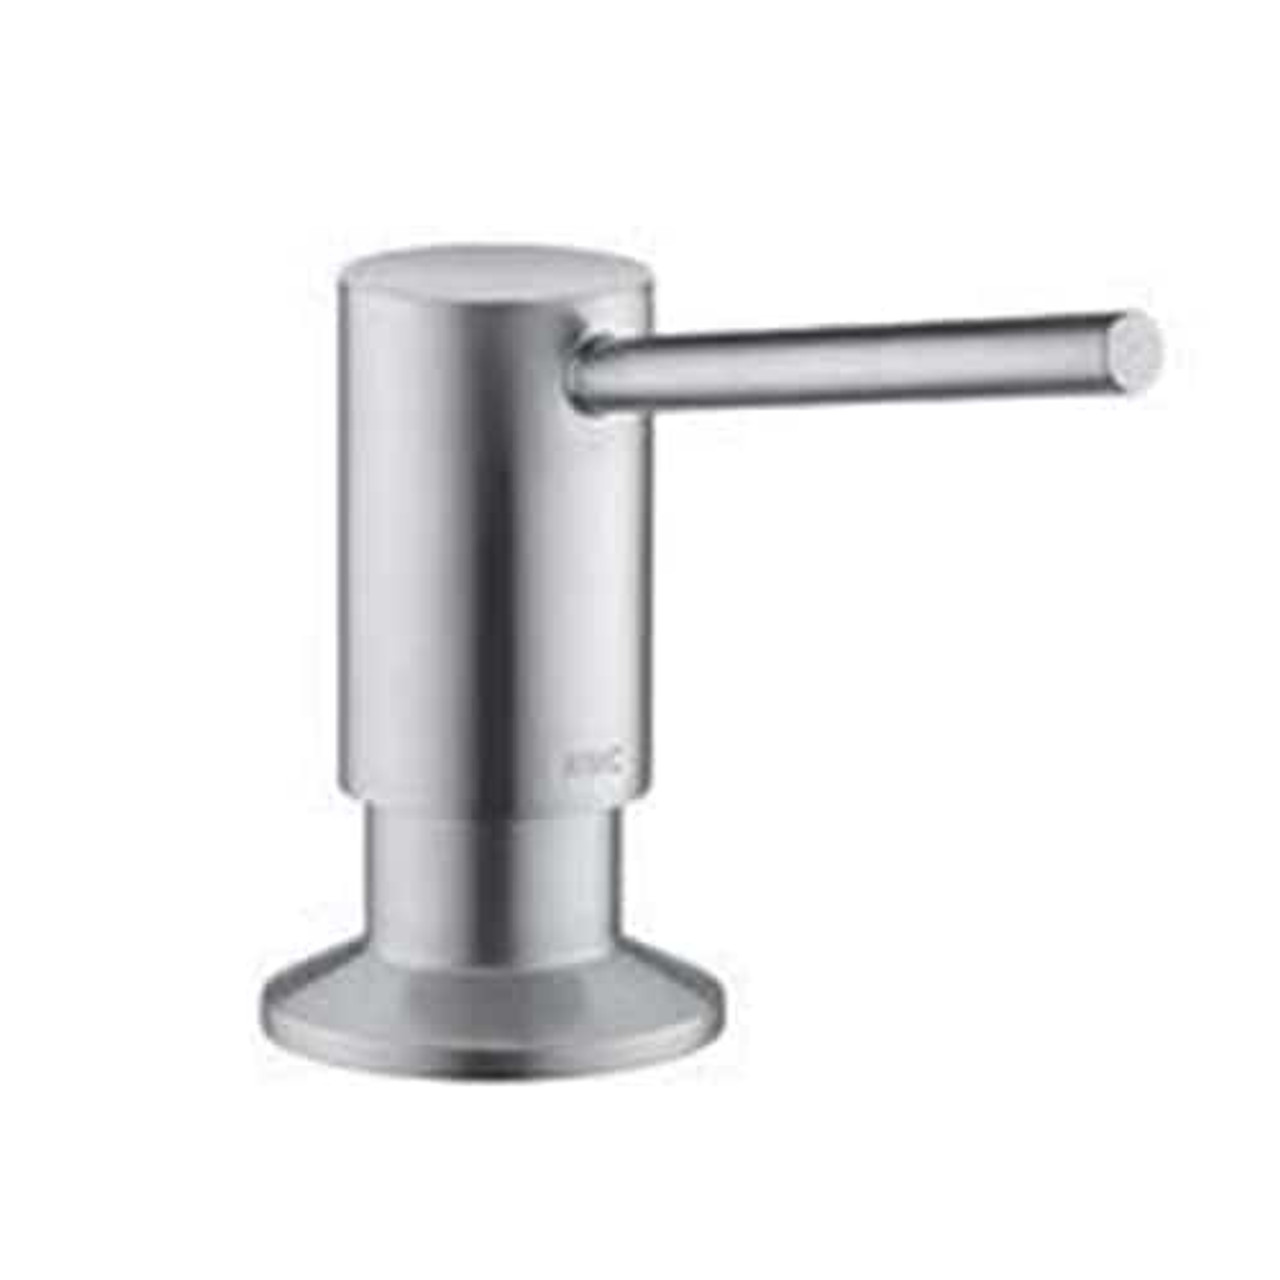 Z.538.409.177 - Basic Soap Dispenser - Brushed Steel